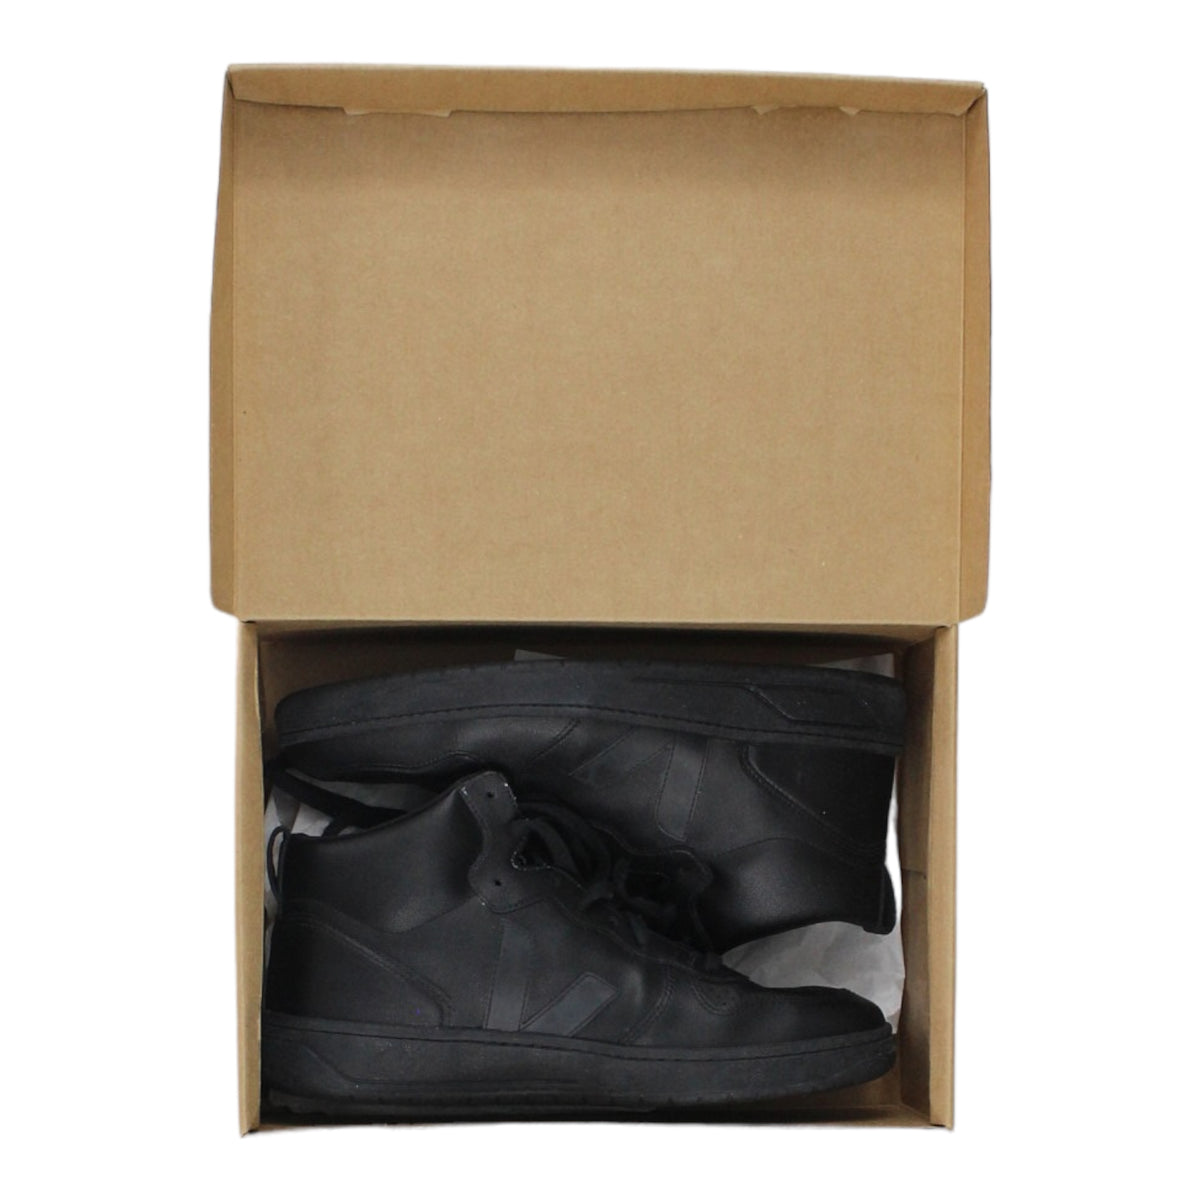 Veja Black V-15 High Top Vegan Leather Sneaker